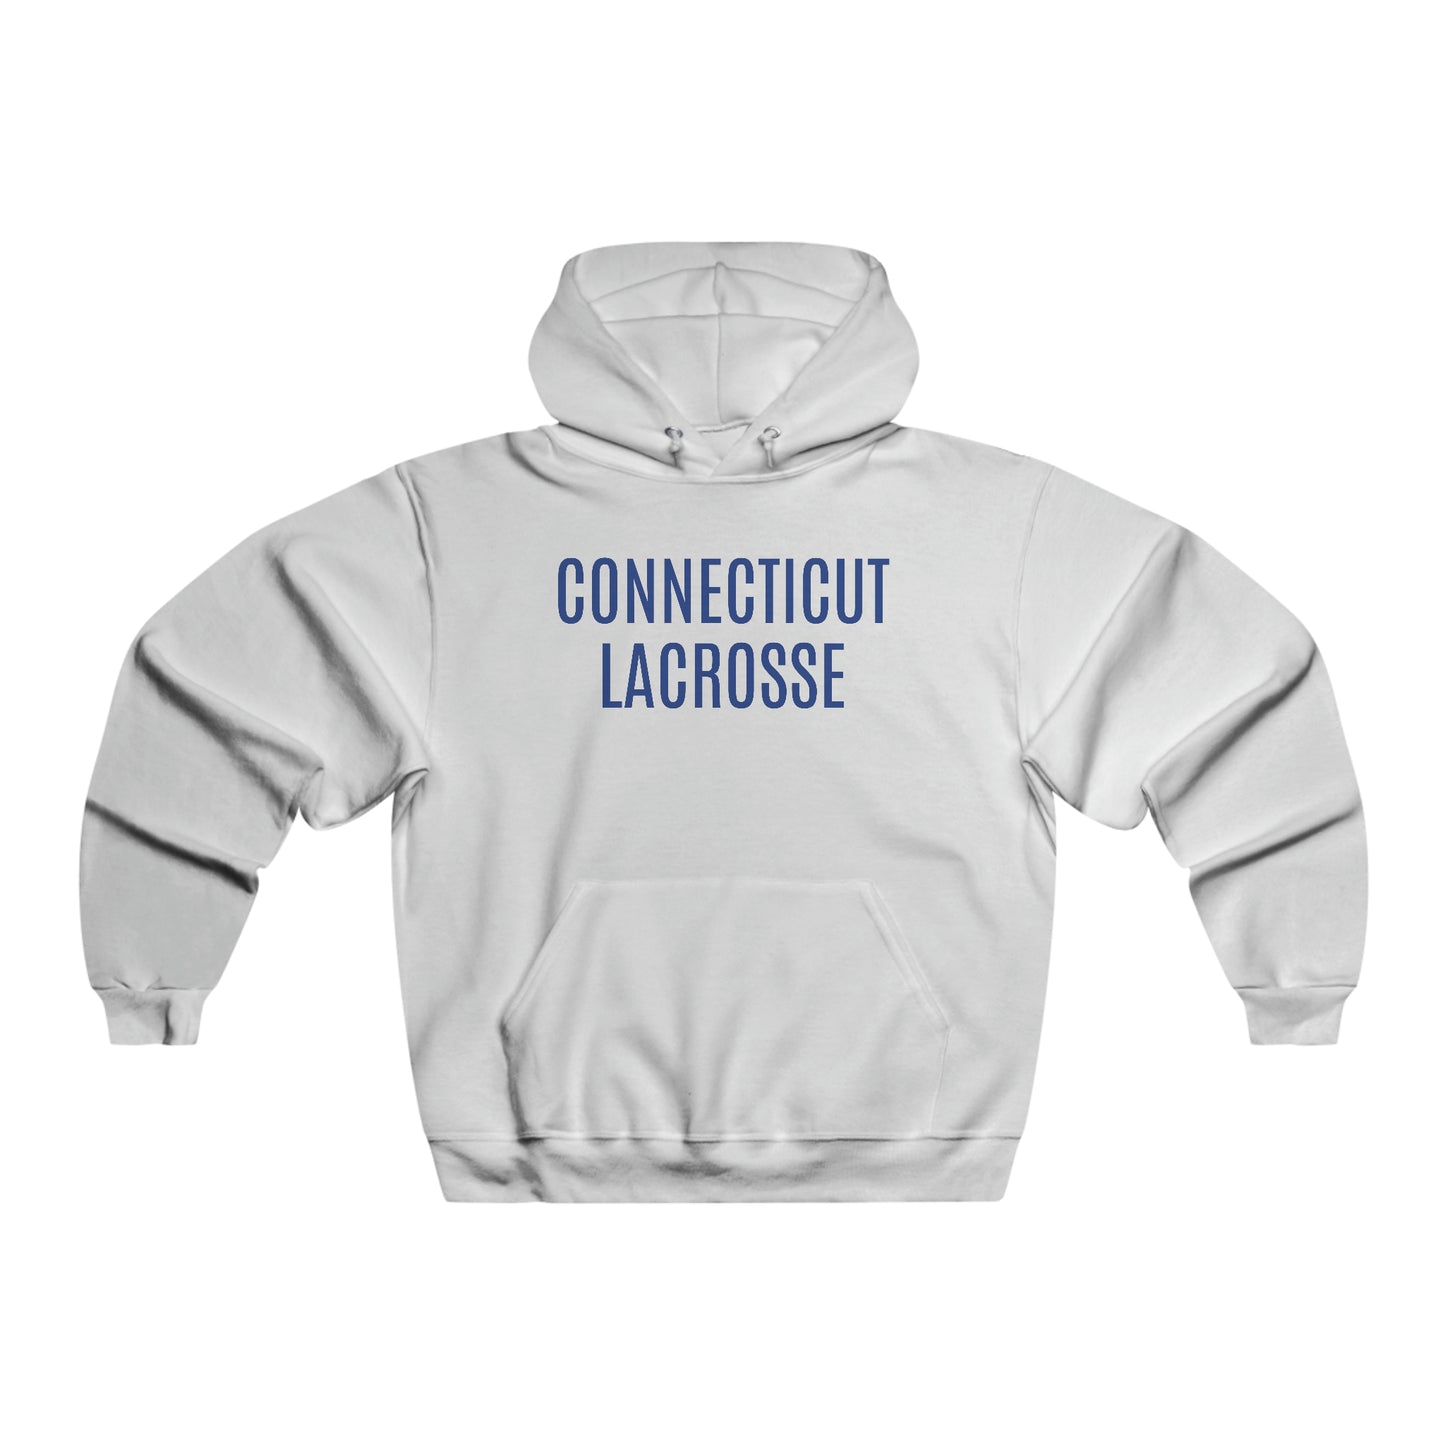 Connecticut Lacrosse Hooded Sweatshirt